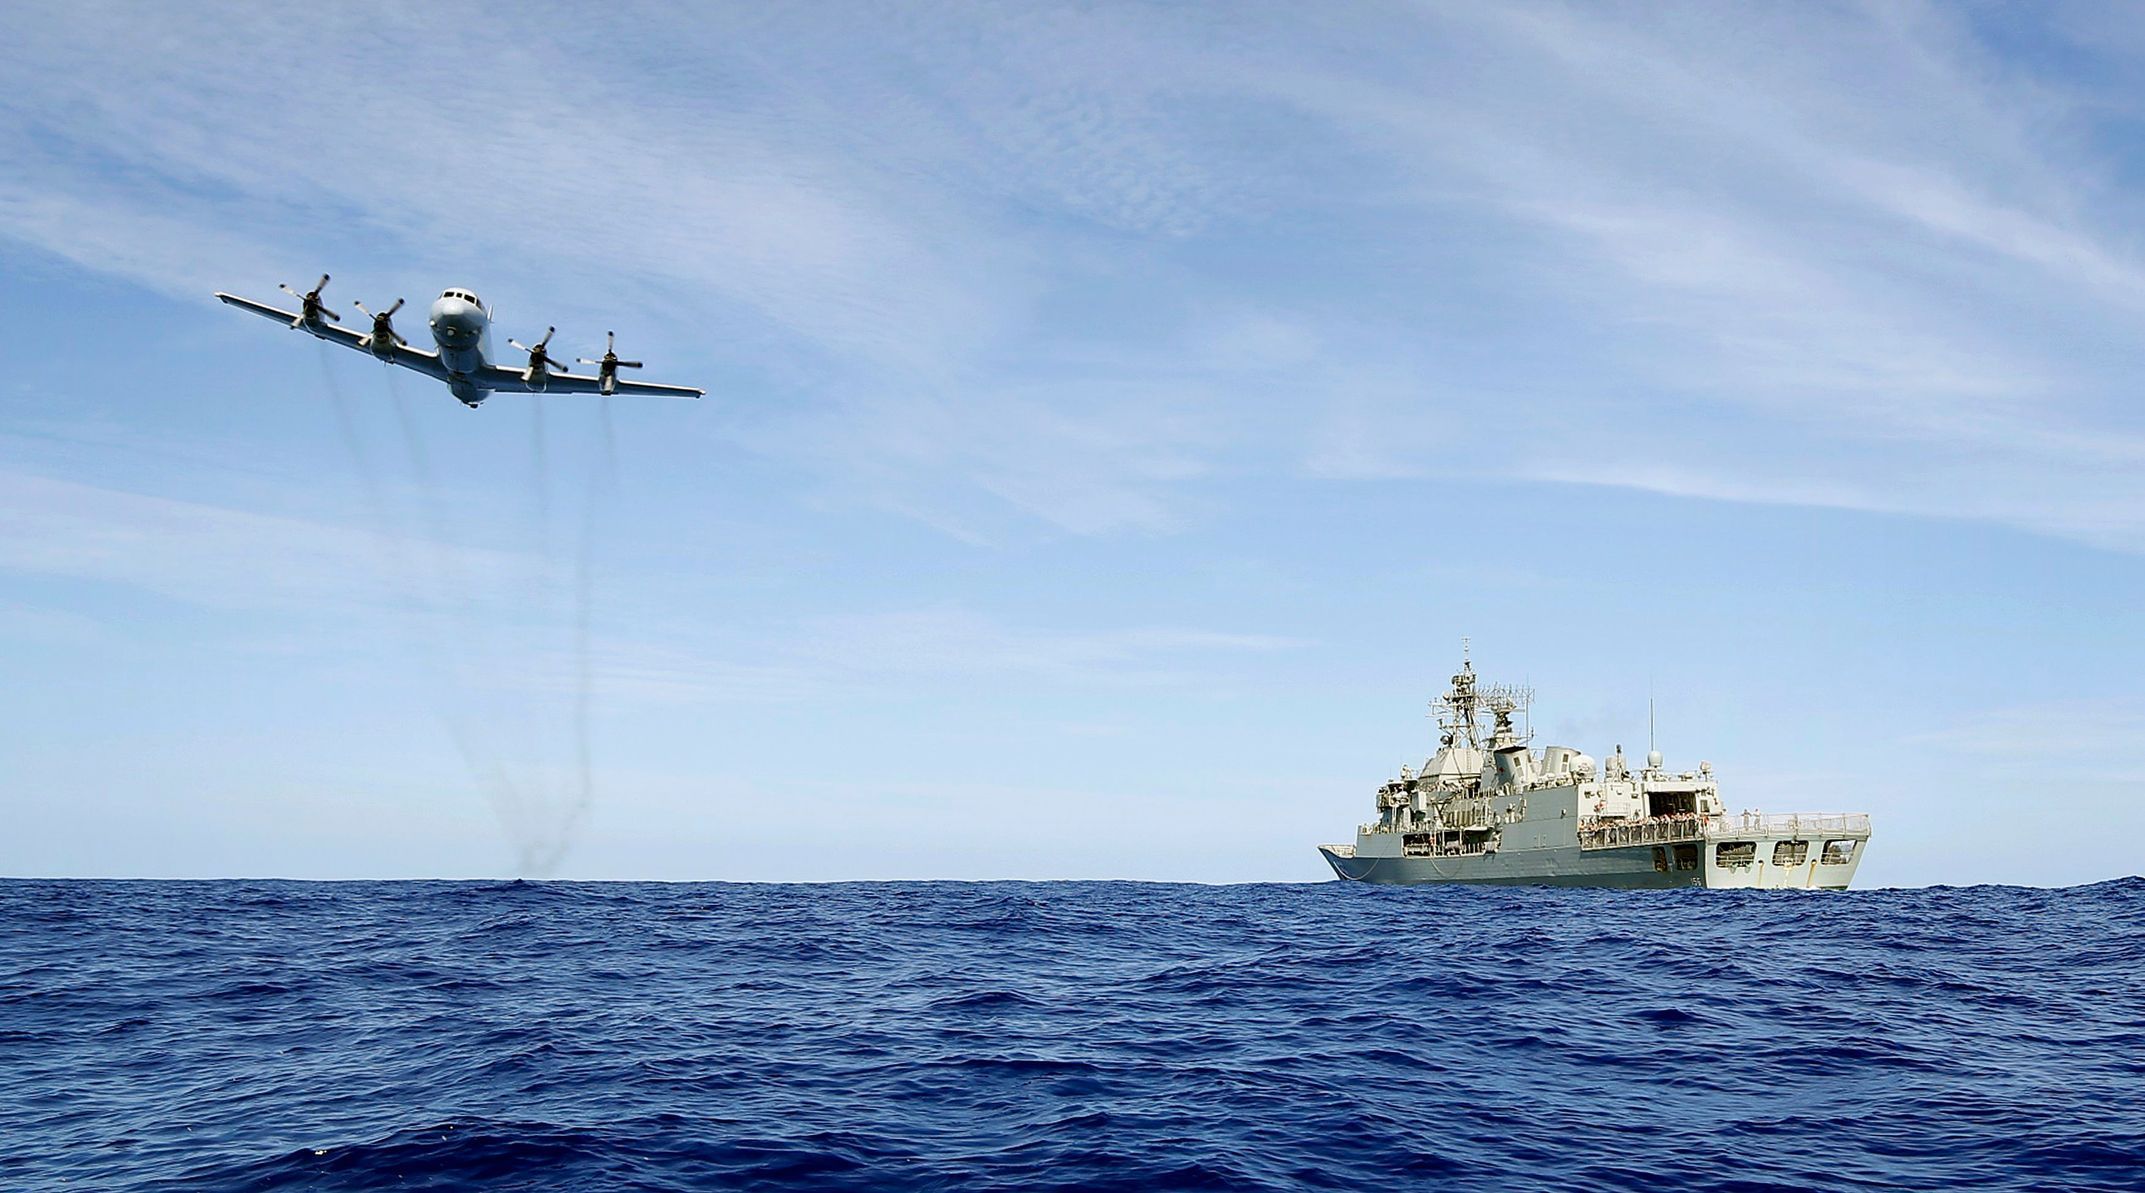 Austrálie - Indický oceán - pátrání - boeing - MH370